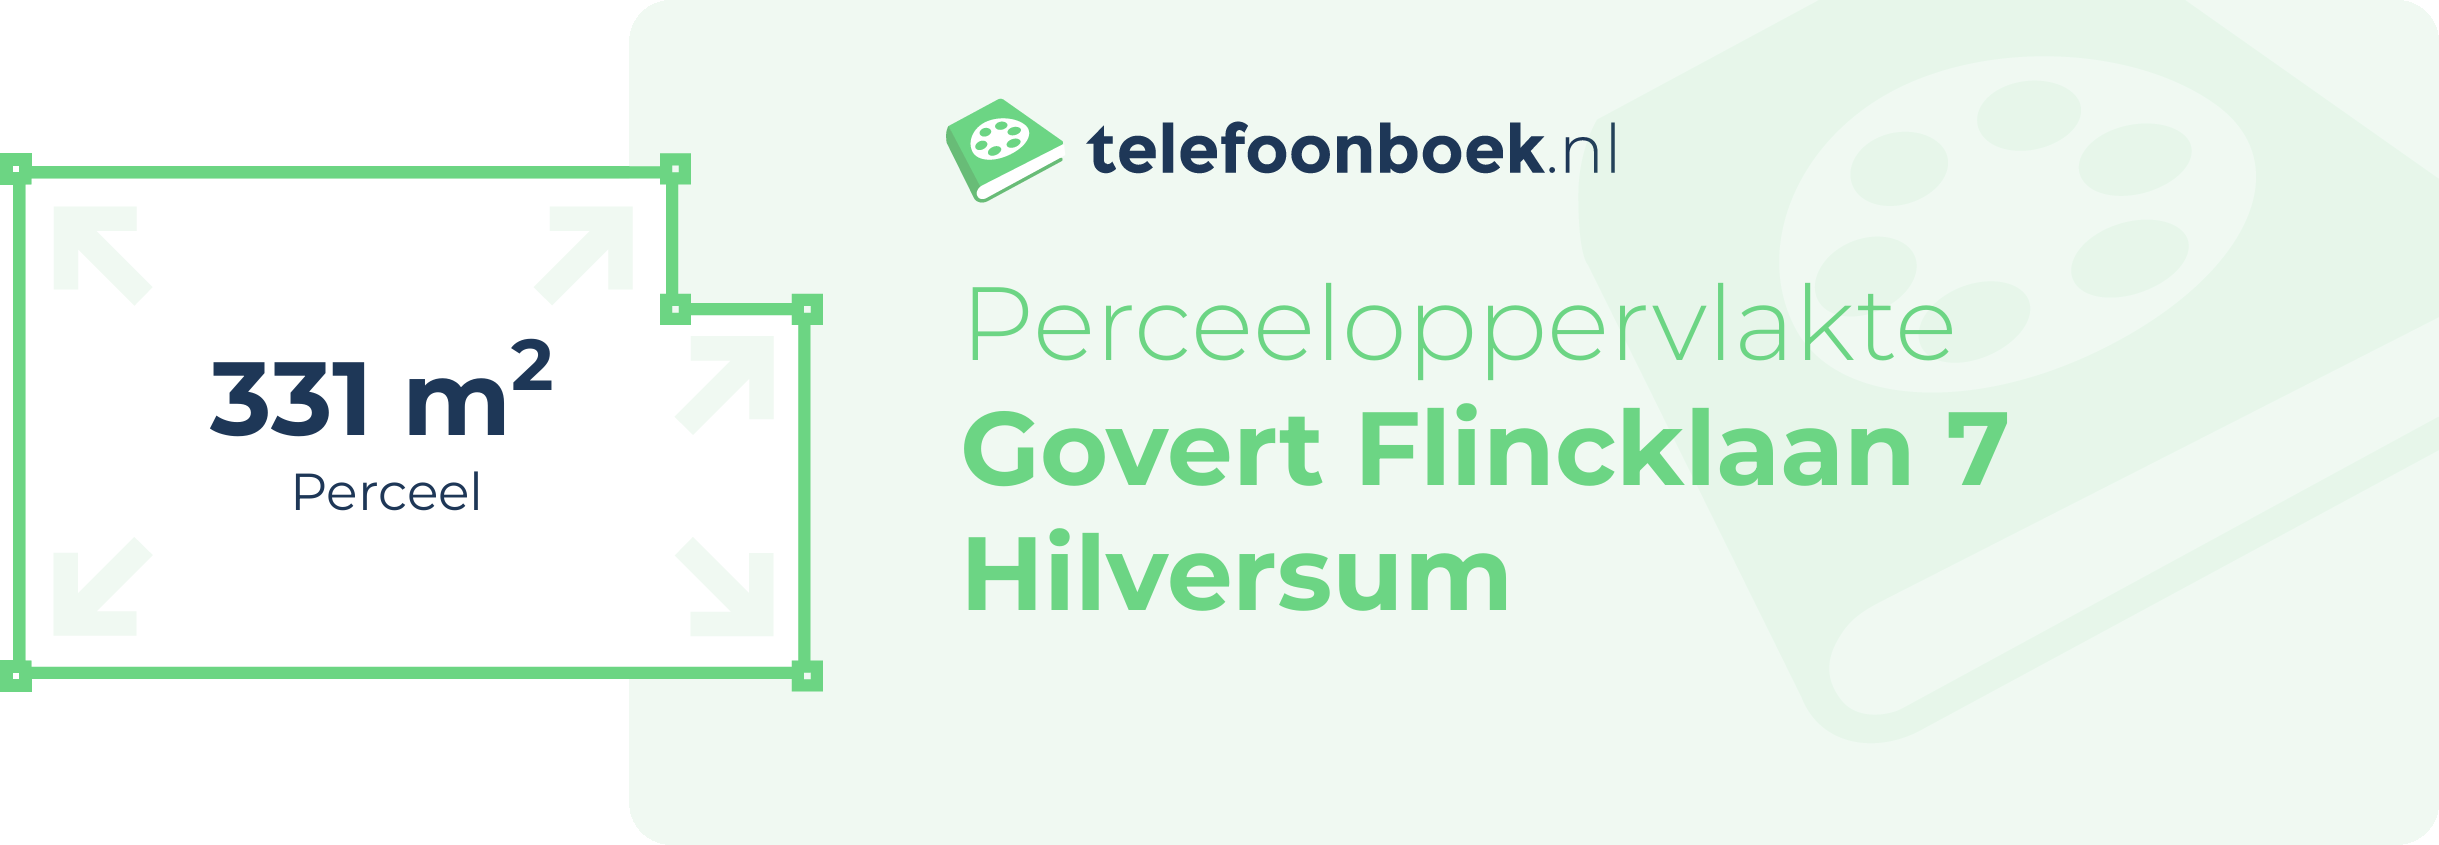 Perceeloppervlakte Govert Flincklaan 7 Hilversum